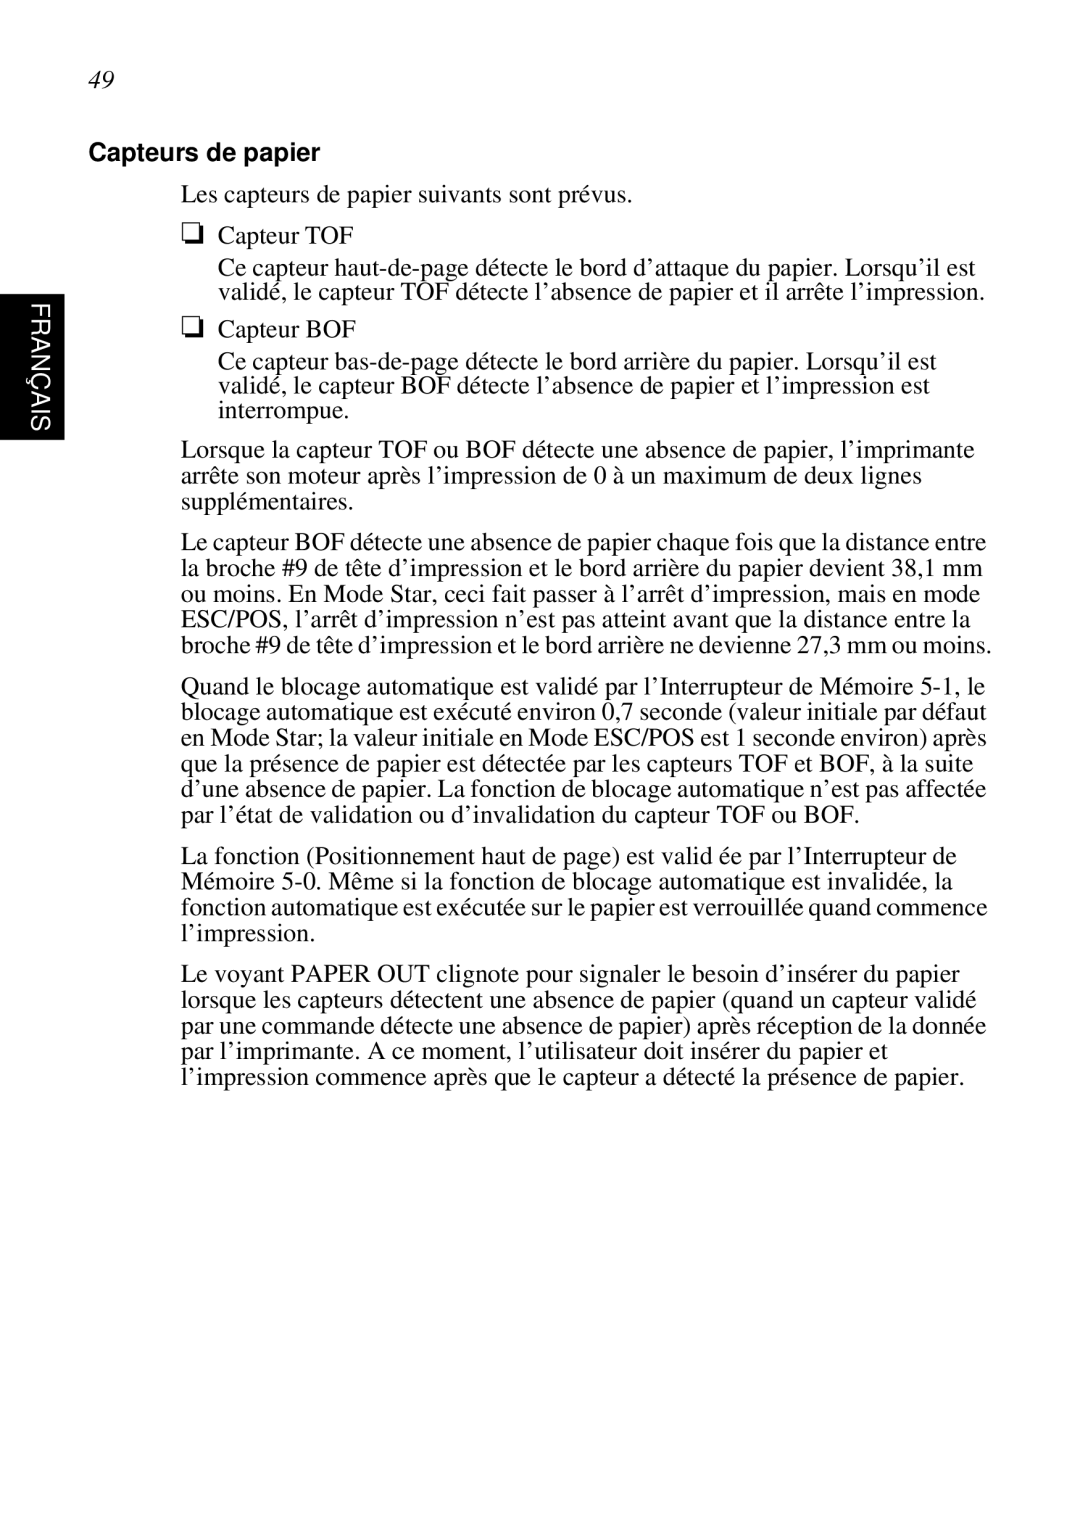 Star Micronics SP298 user manual Français, Capteurs de papier 